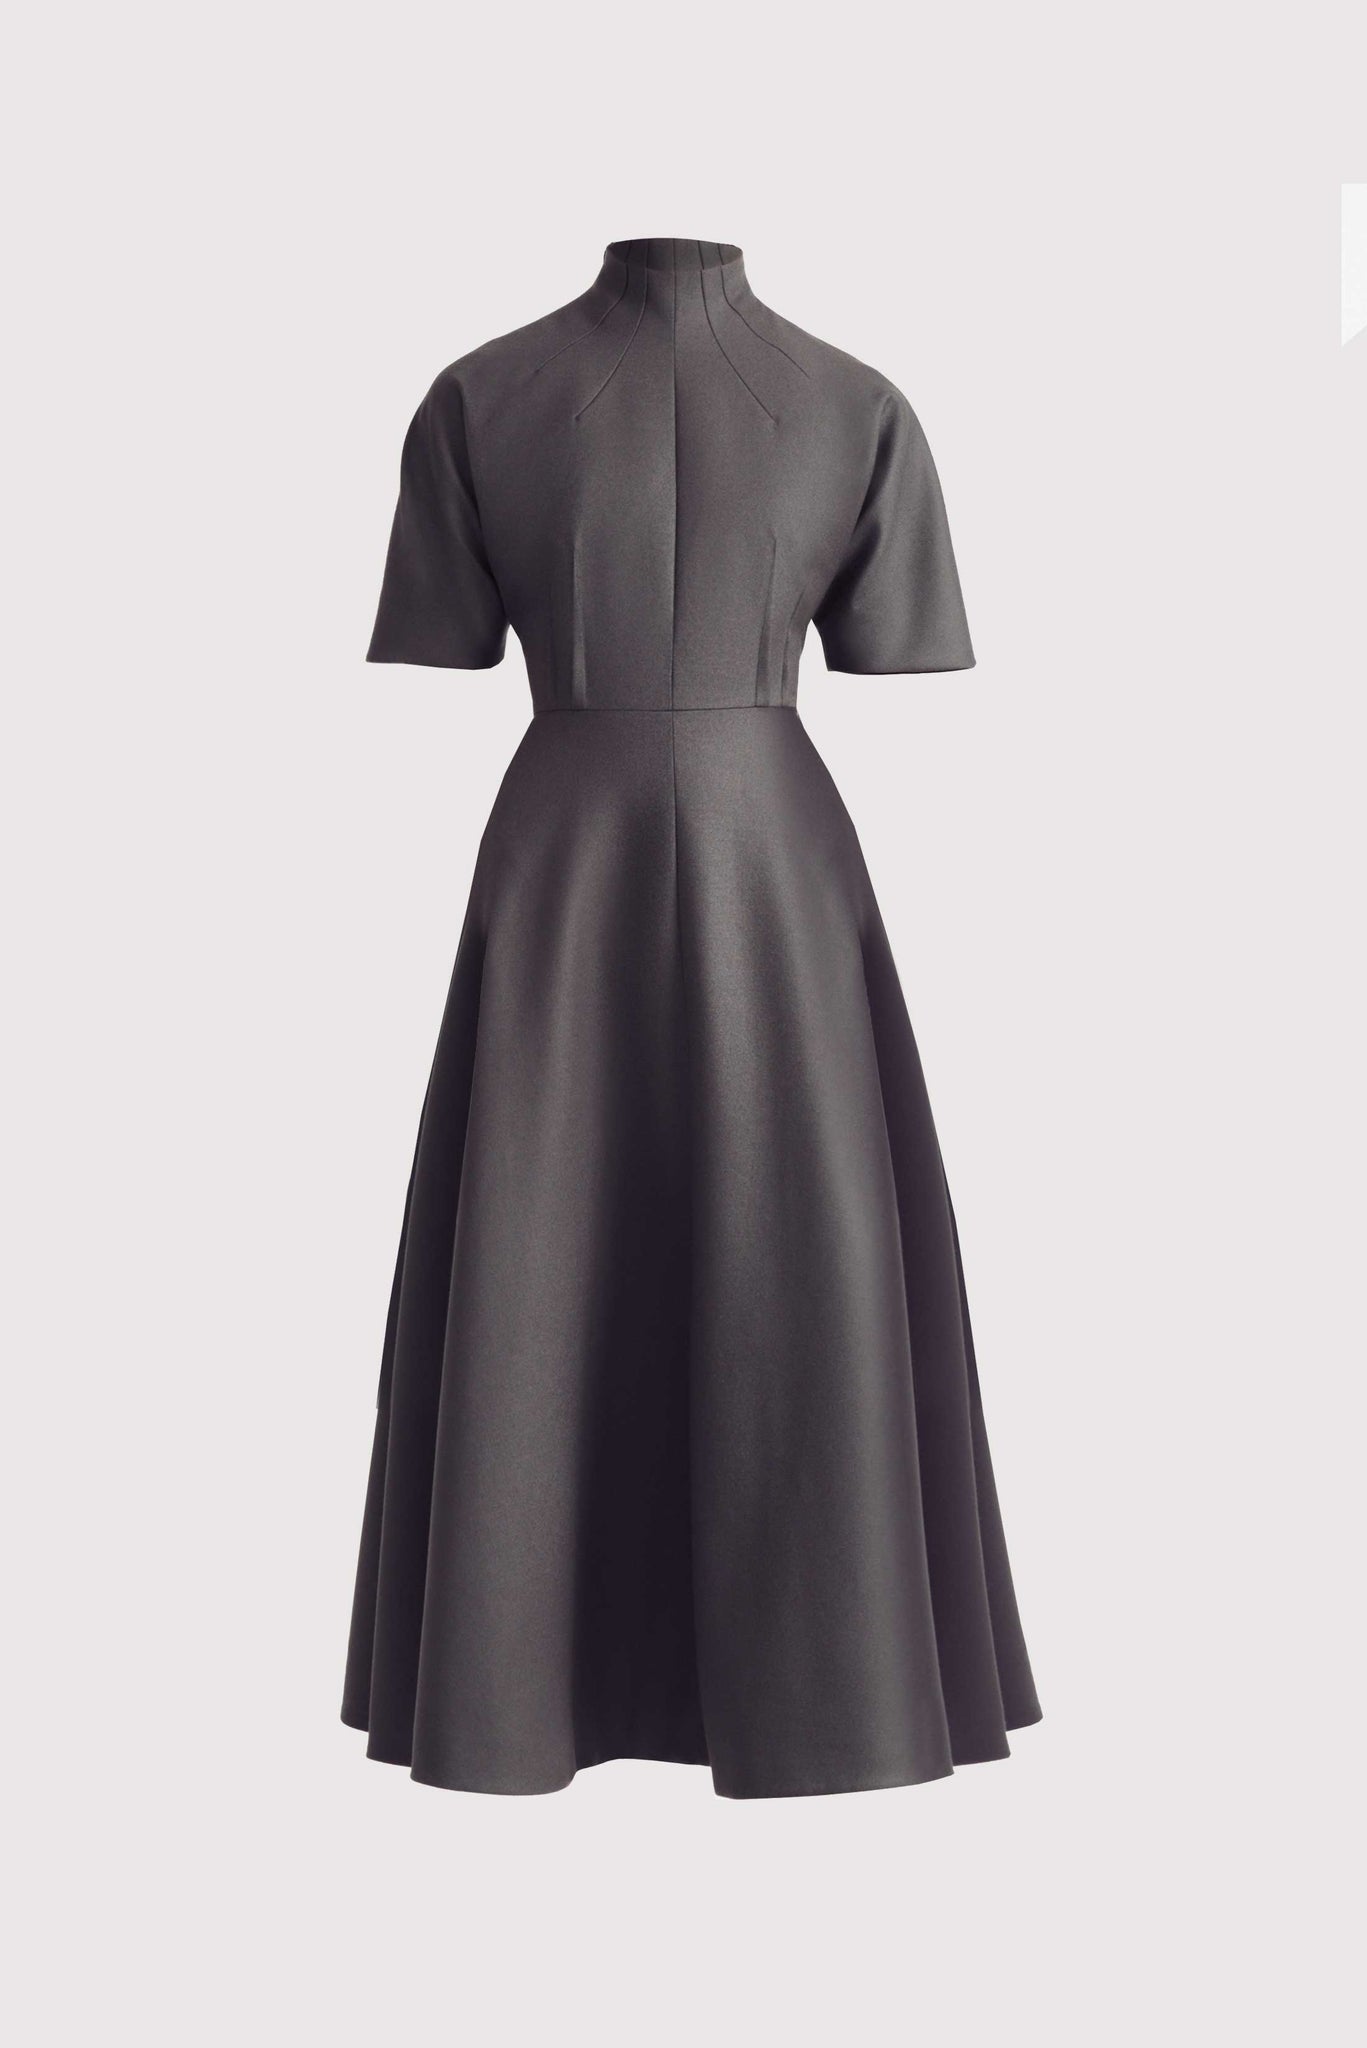 Bellona Grey Flanella High Neck Dress | Emilia Wickstead